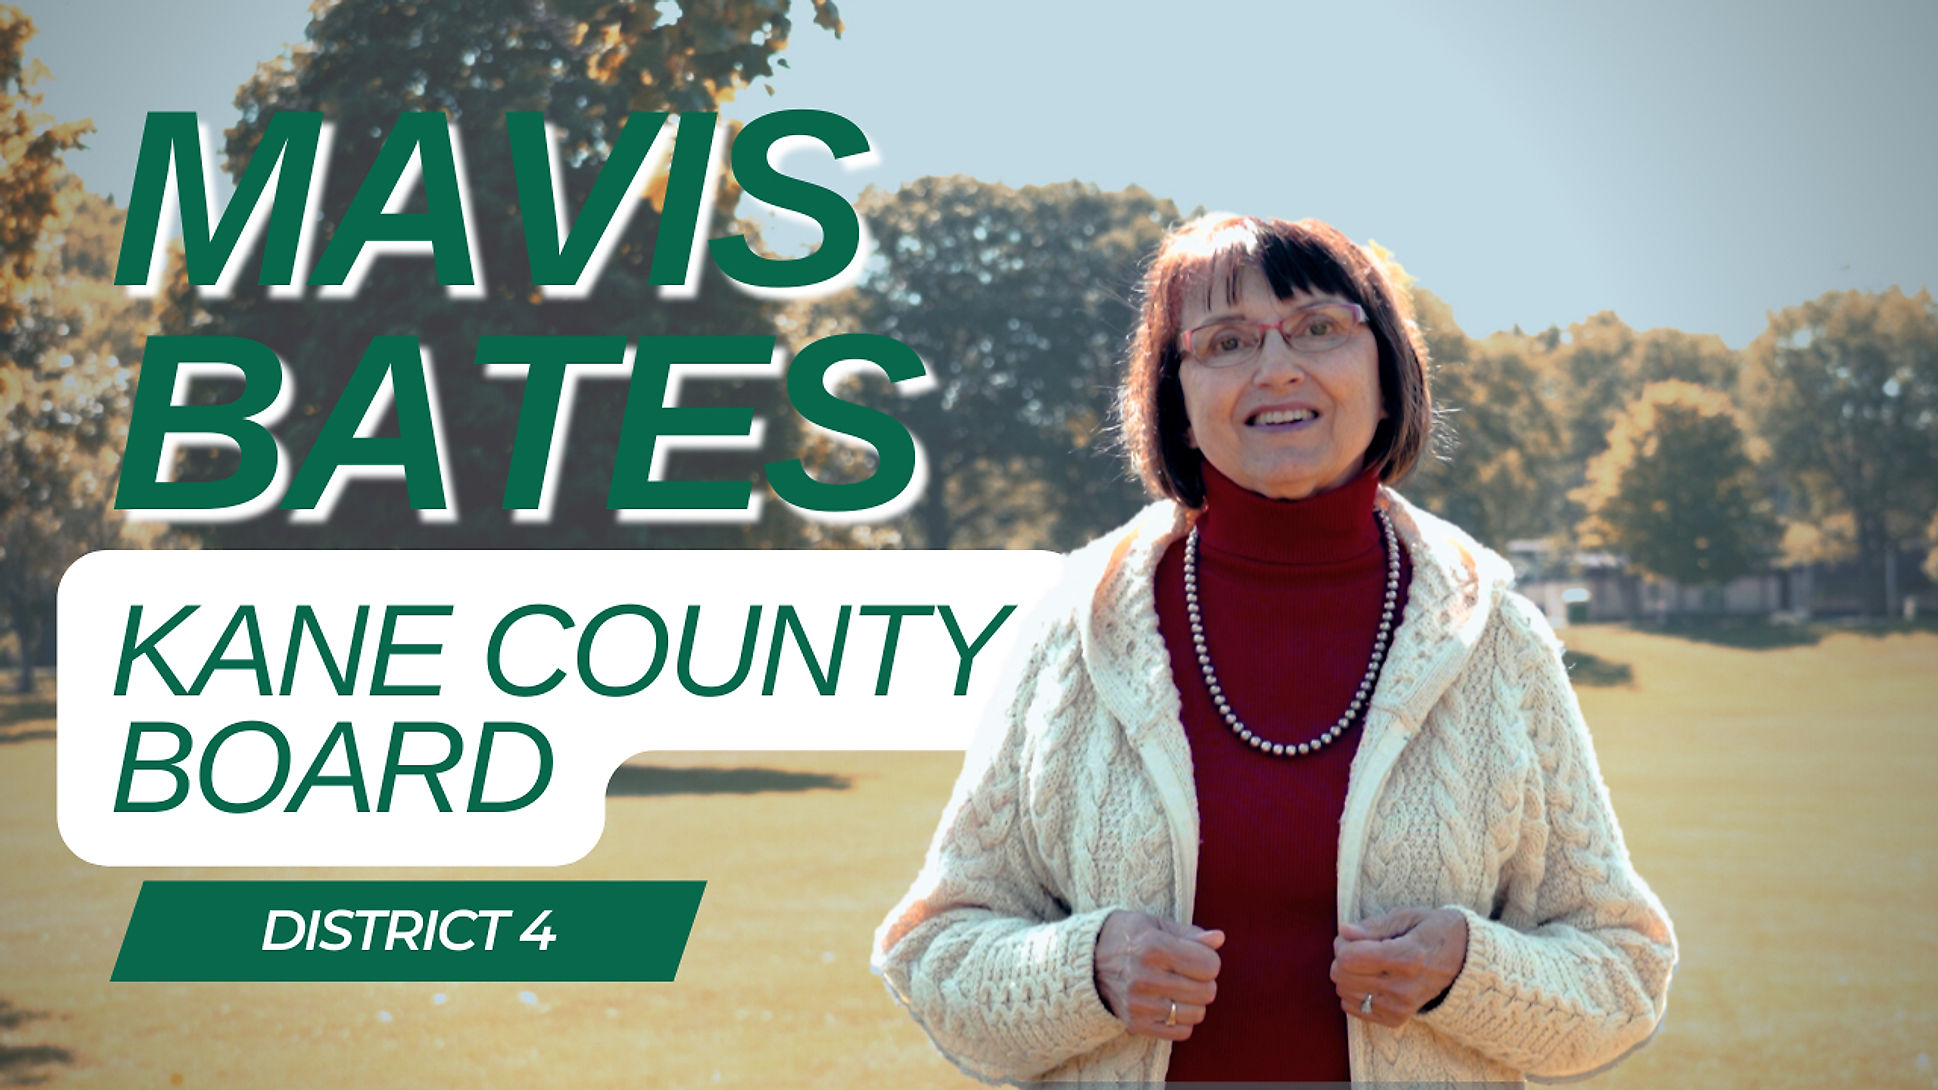 Mavis Bates Kane County Board